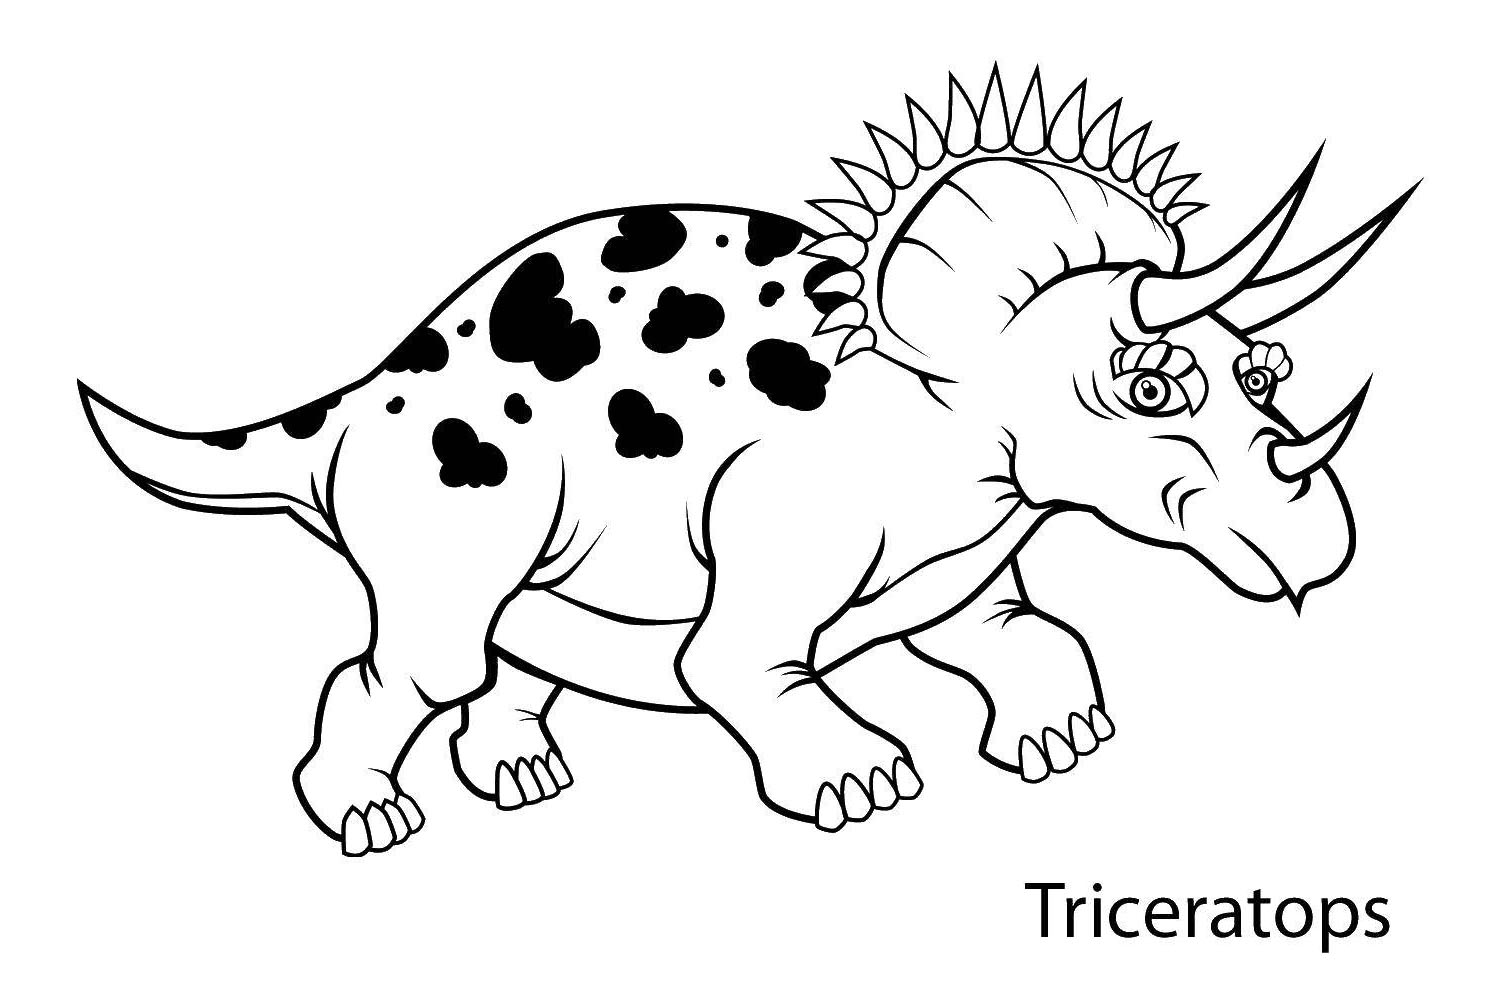 Coloring Triceraptor cub. Category dinosaur. Tags:  triceraptor, cub.